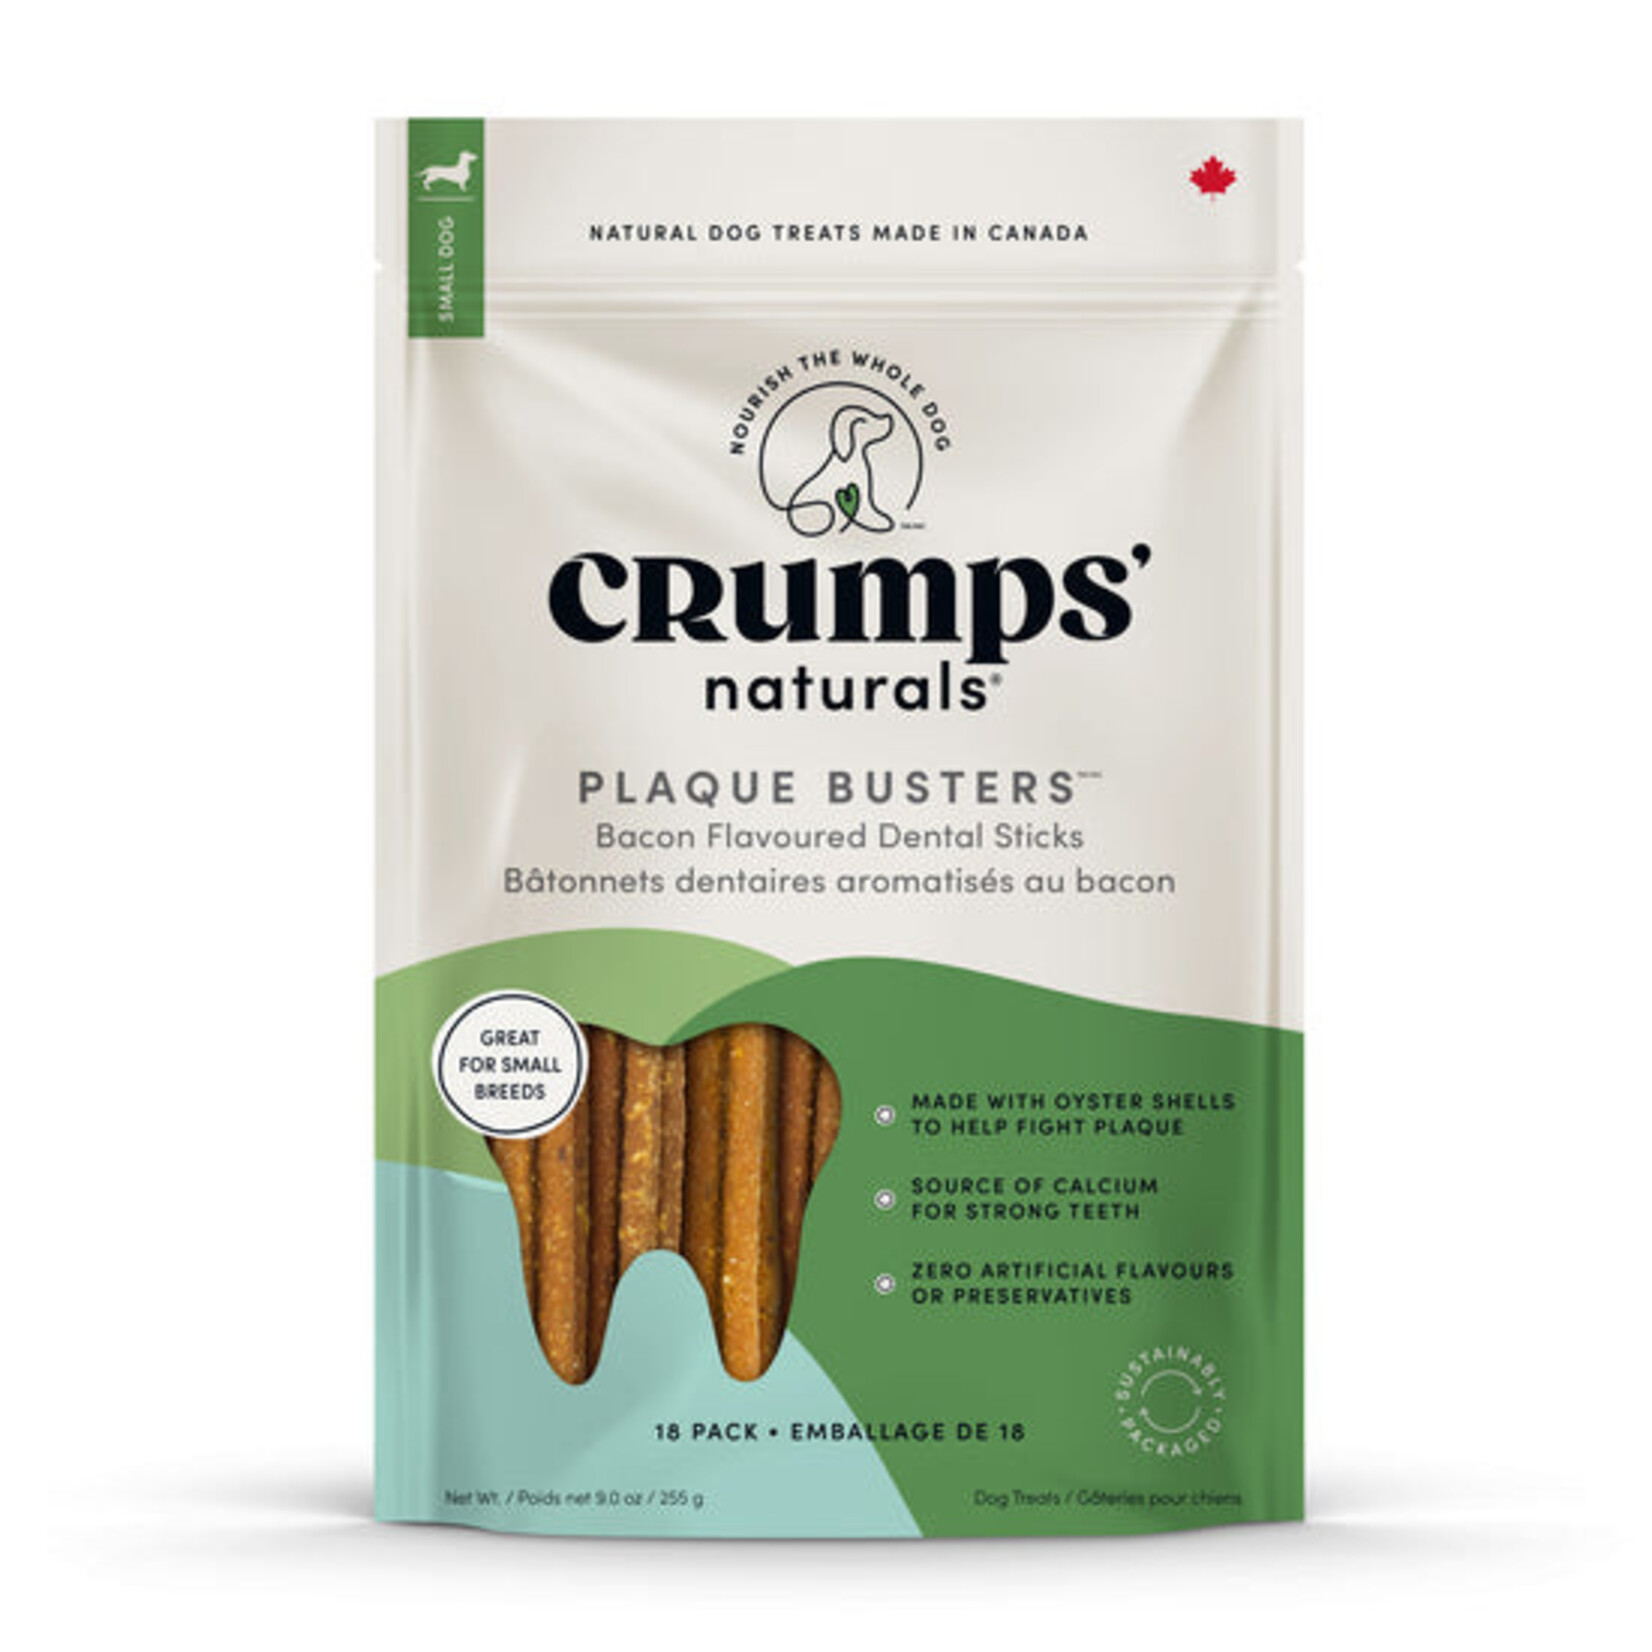 Crumps Naturals Crumps' Naturals Plaque Busters Bacon 7in 10pk